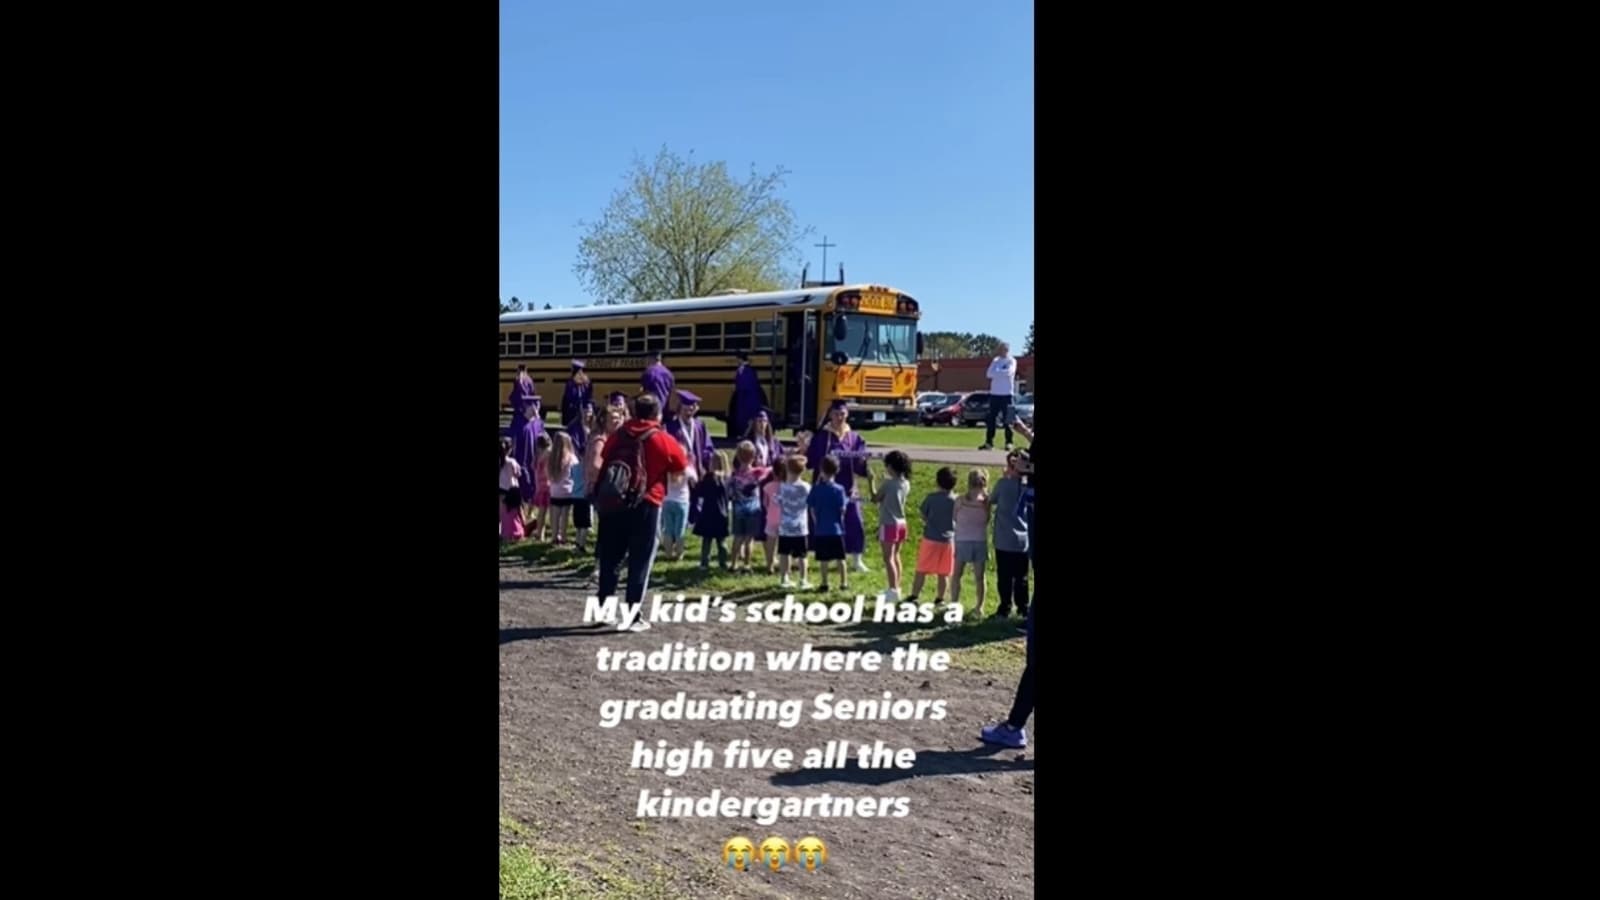 Graduating seniors high five kindergarteners in sweet tradition at school. Watch